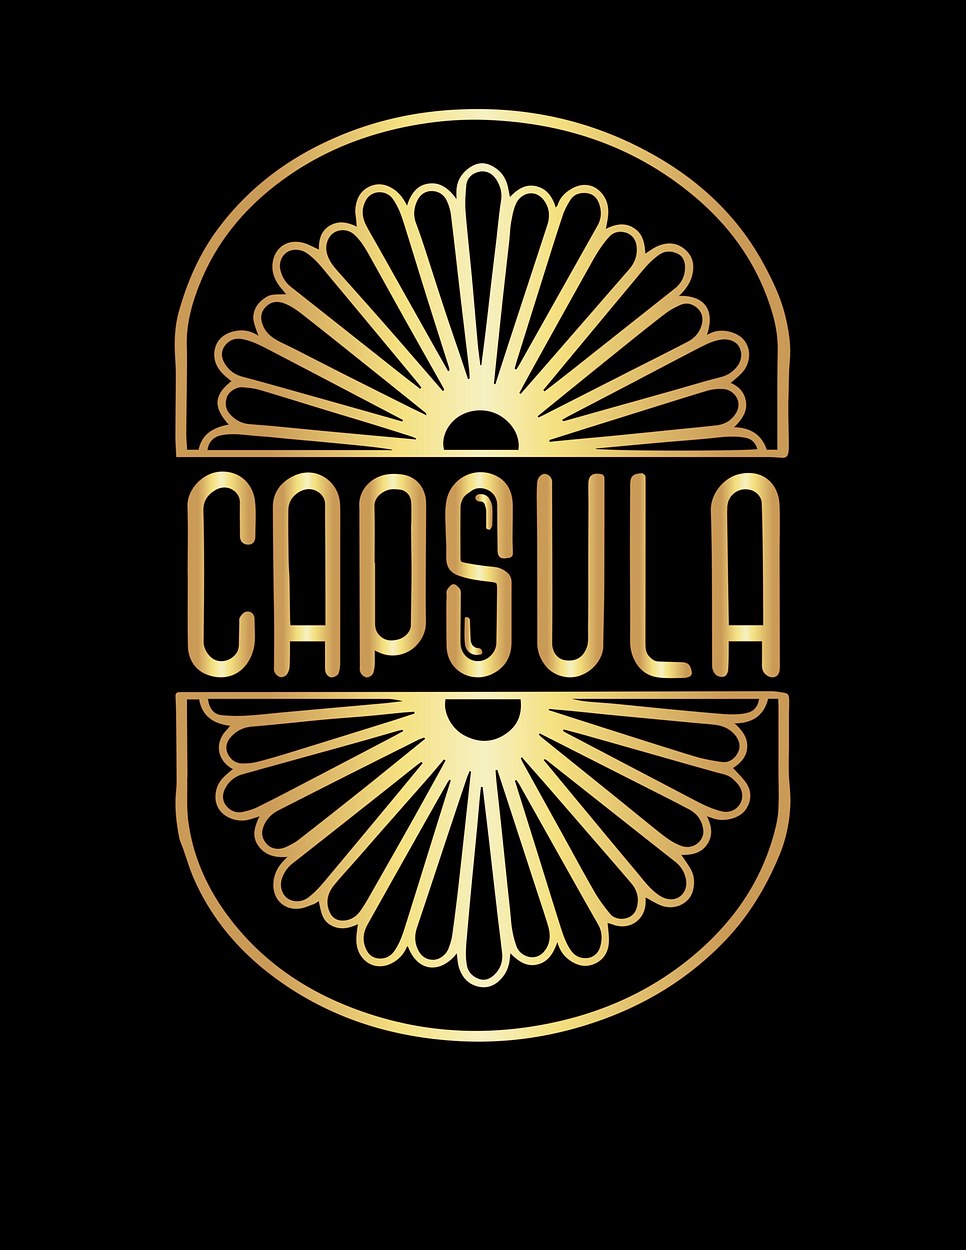 Capsula Logo Black & Gold